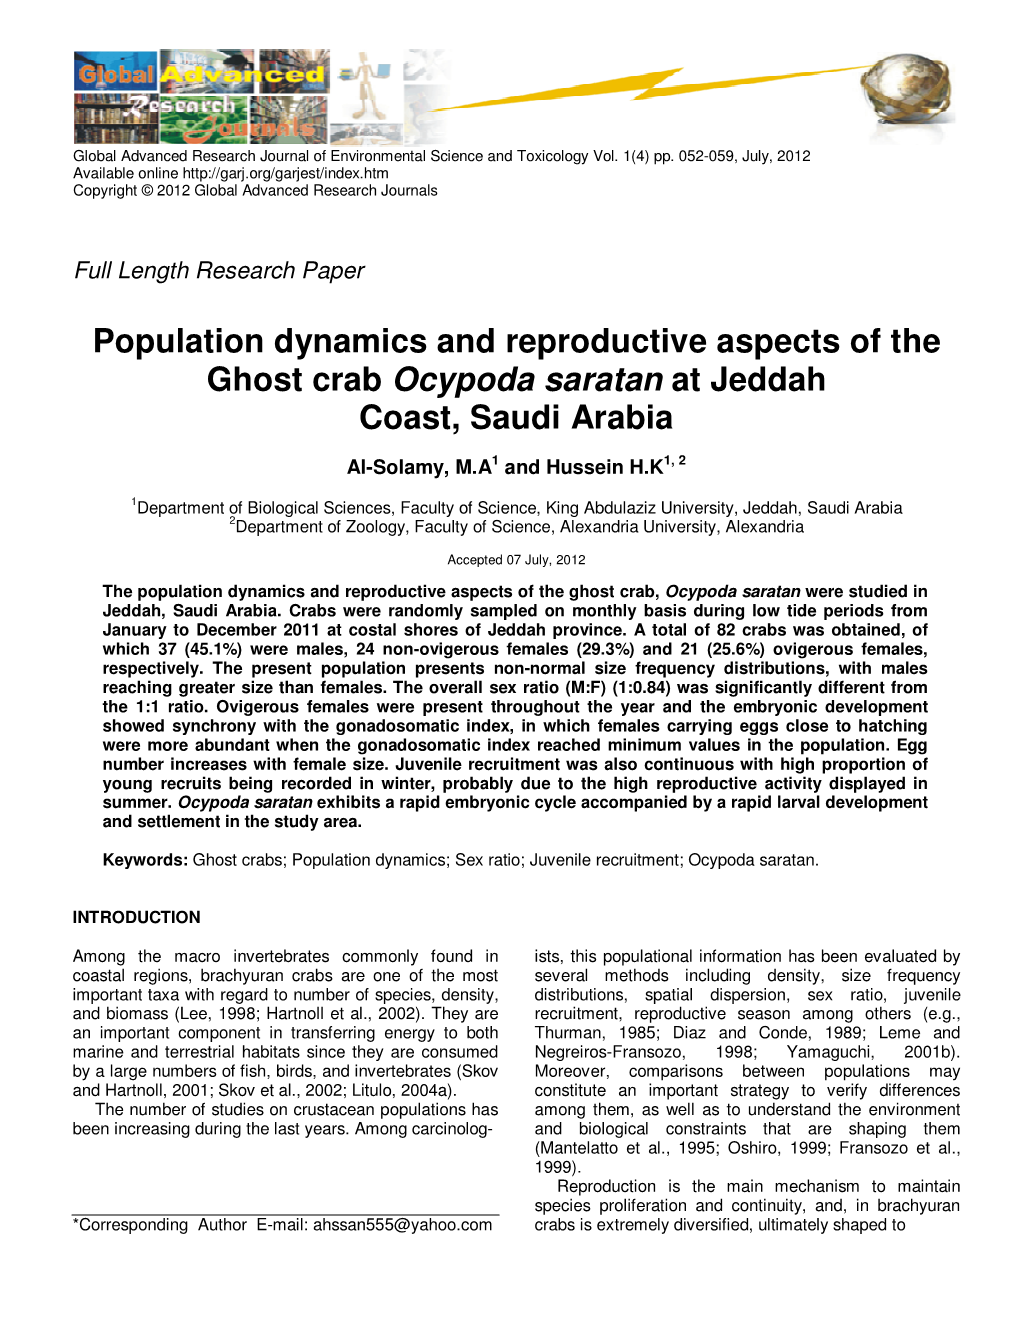 Population Dynamics and Reproductive Aspects of the Ghost Crab Ocypoda Saratan at Jeddah Coast, Saudi Arabia